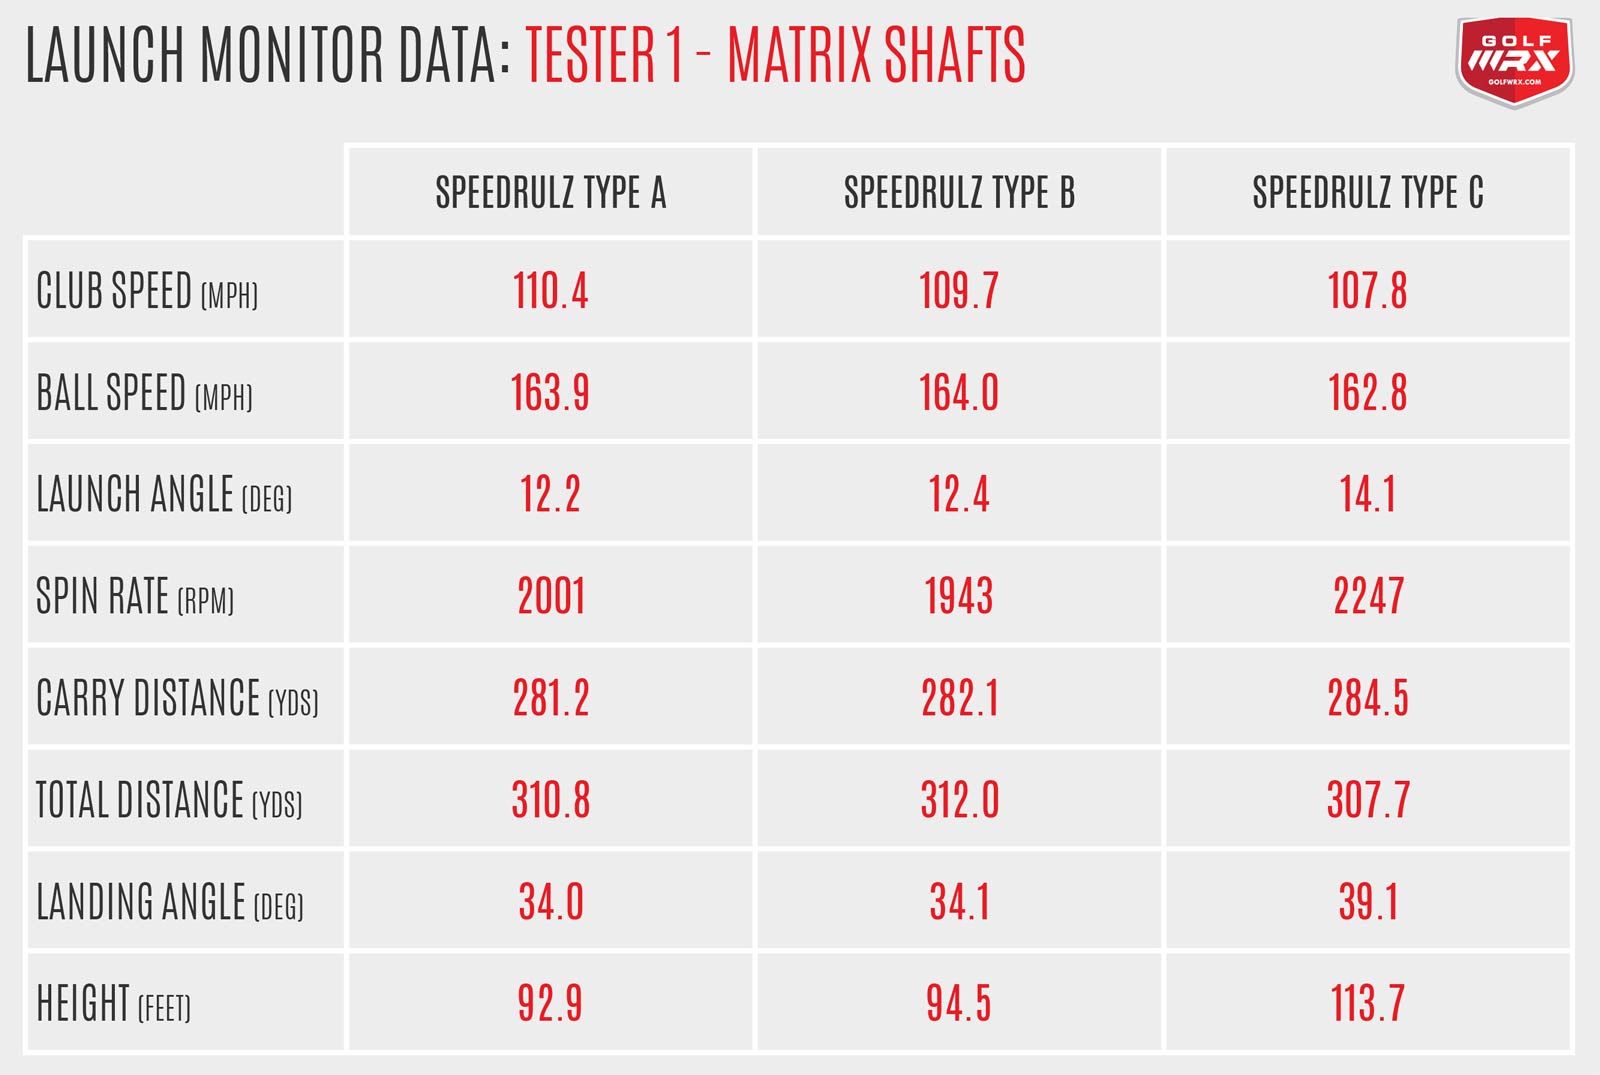 Matrix Shaft Swing Speed Chart